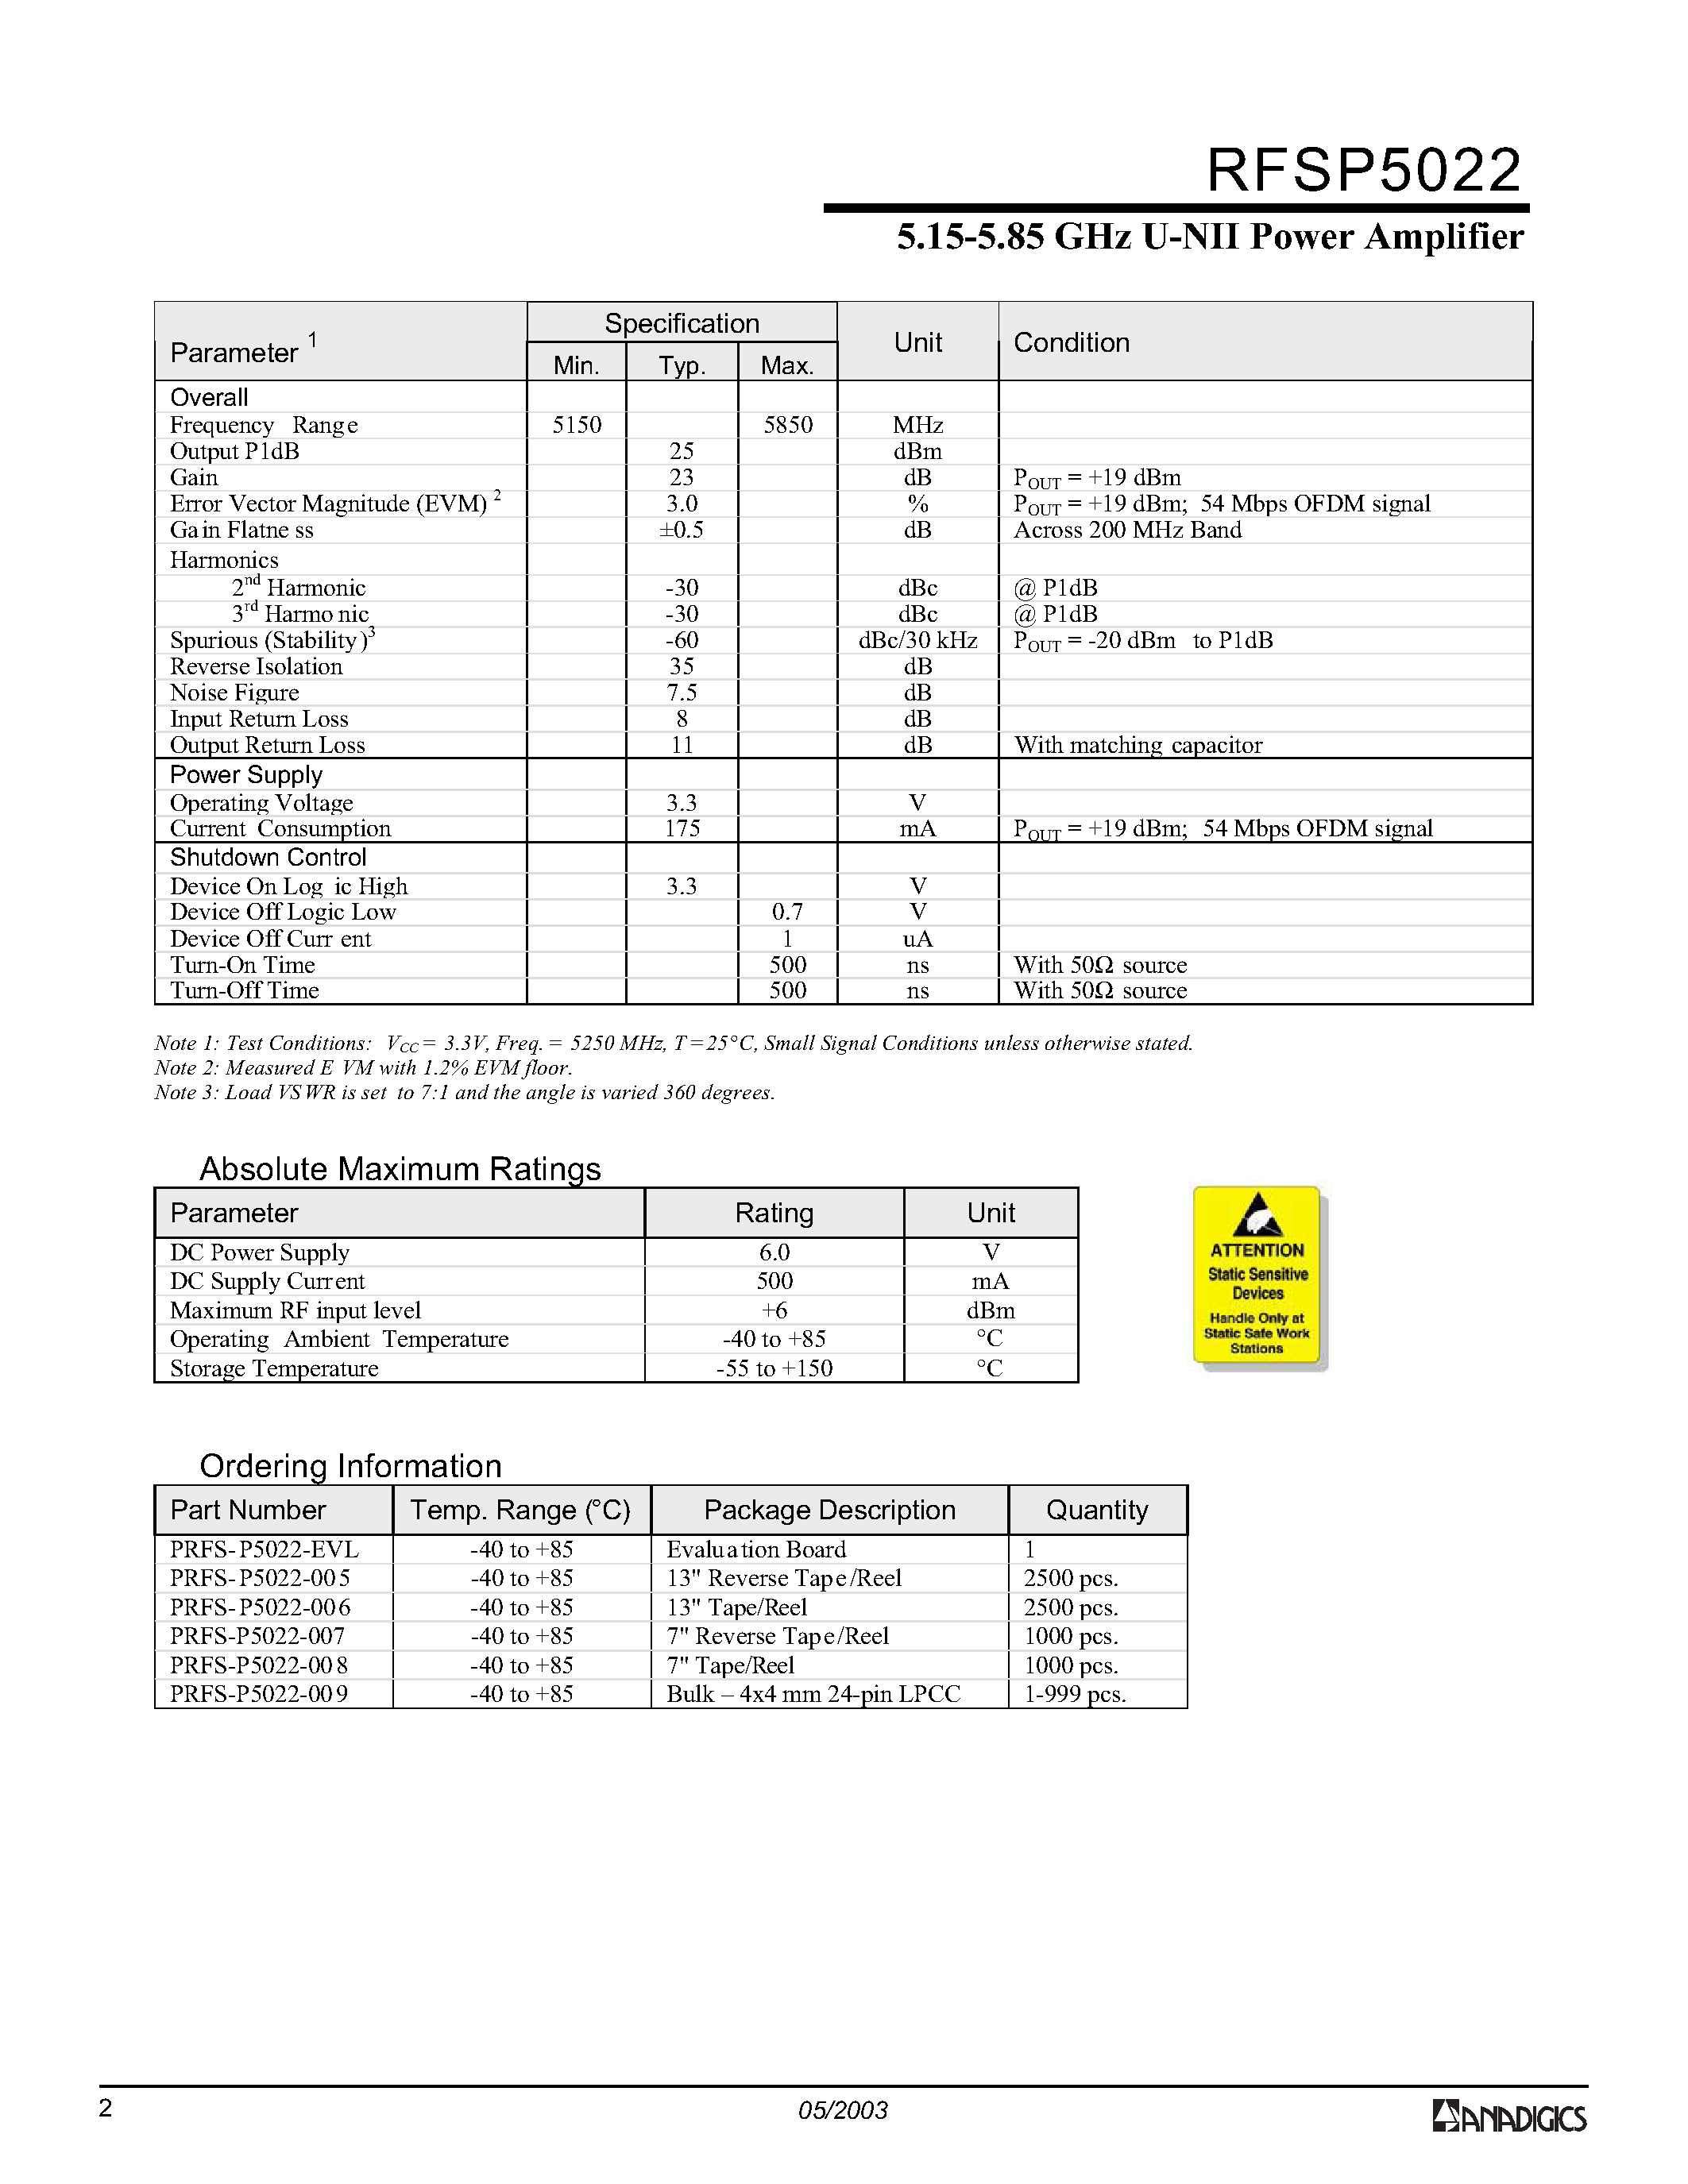 Даташит PRFS-P5022-EVL - 5.15-5.85 GHz U-NII Power Amplifier страница 2